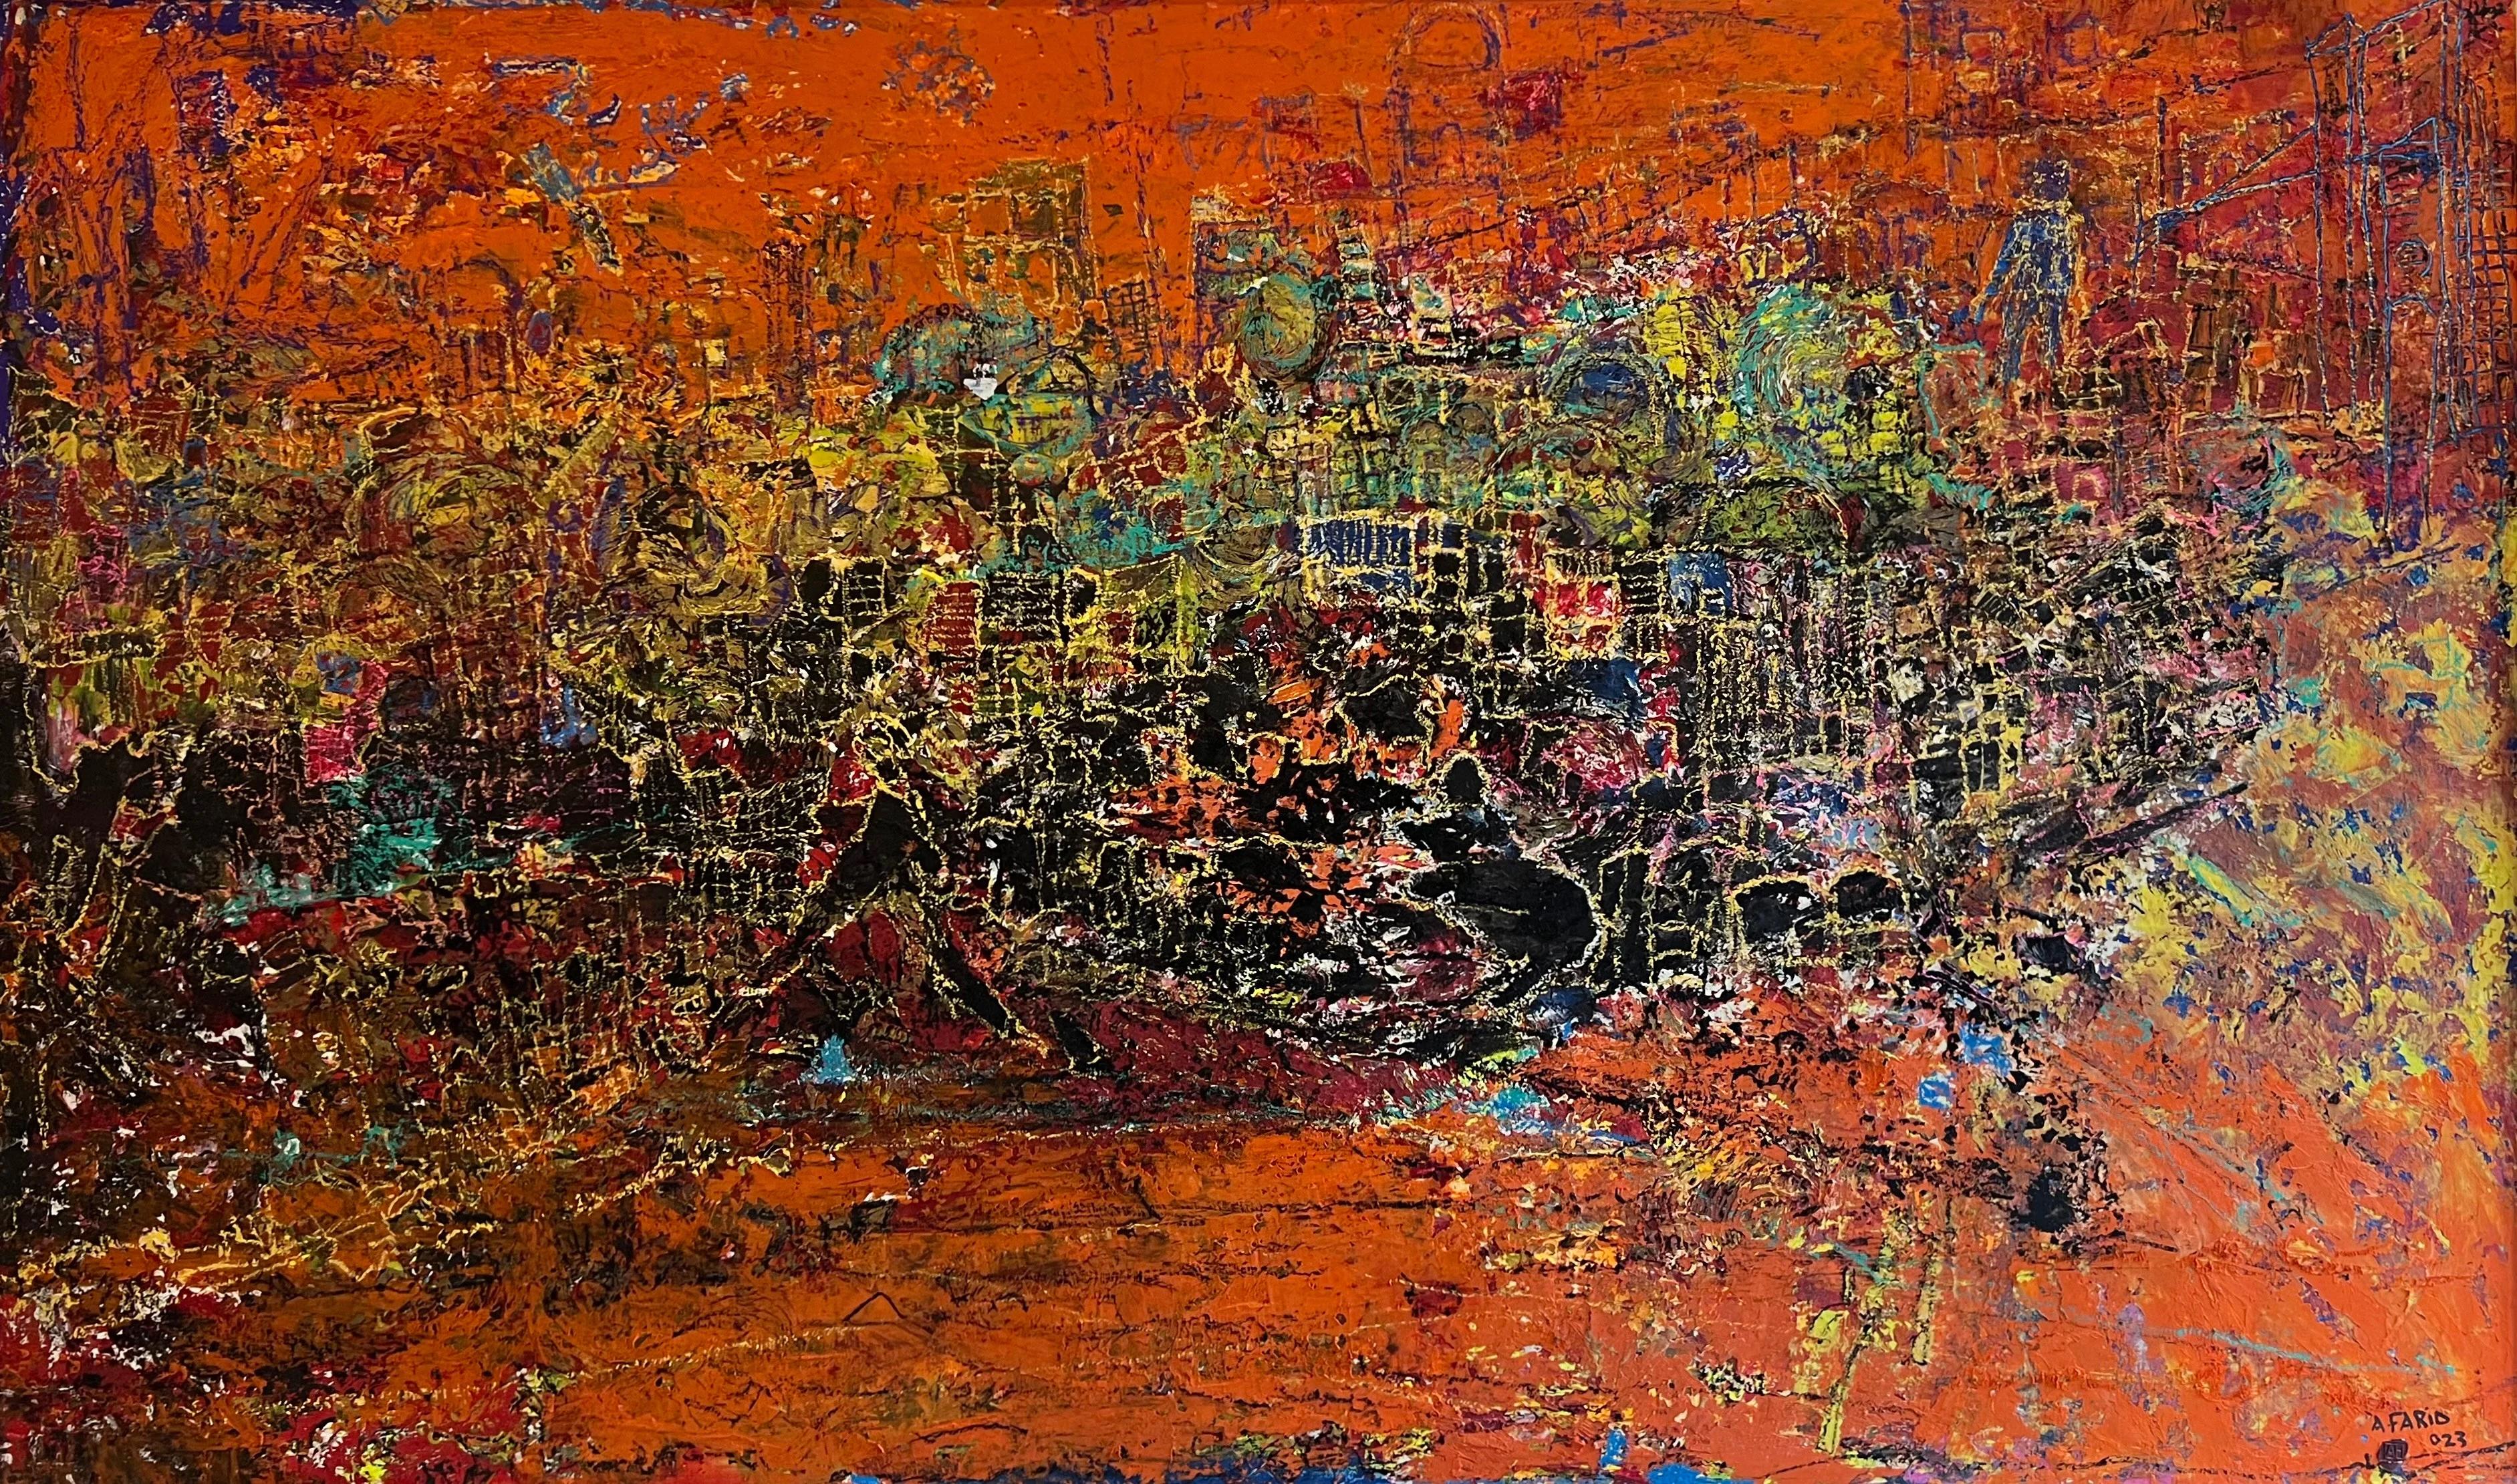 "Lava" Abstract Mixed Media Painting 47" x 79" inch by Ahmed Farid